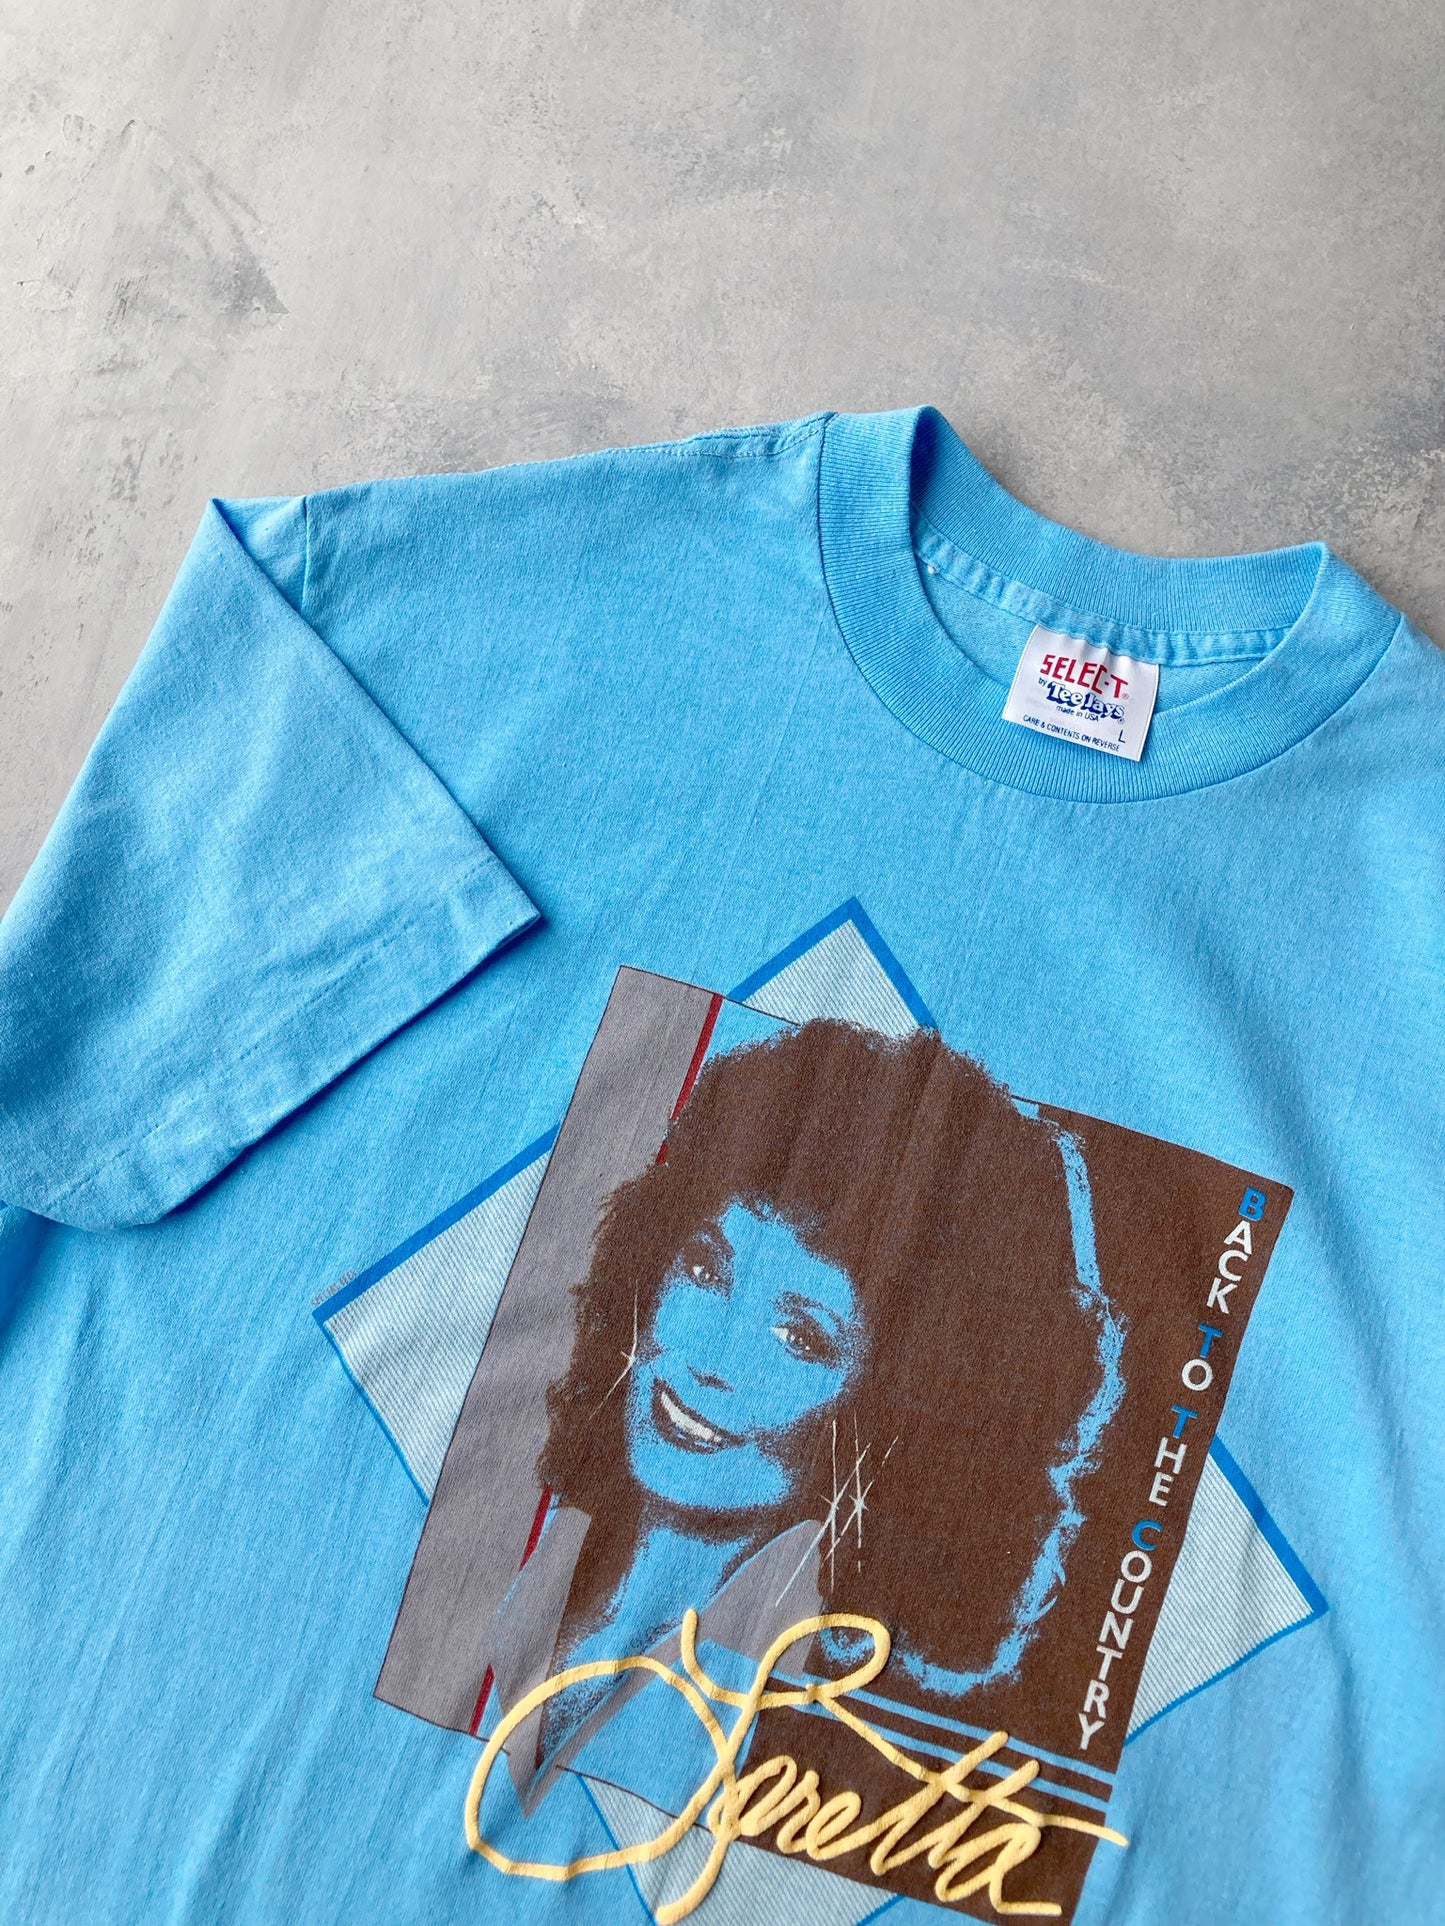 Loretta Lynn Graphic T-Shirt 80's - Medium